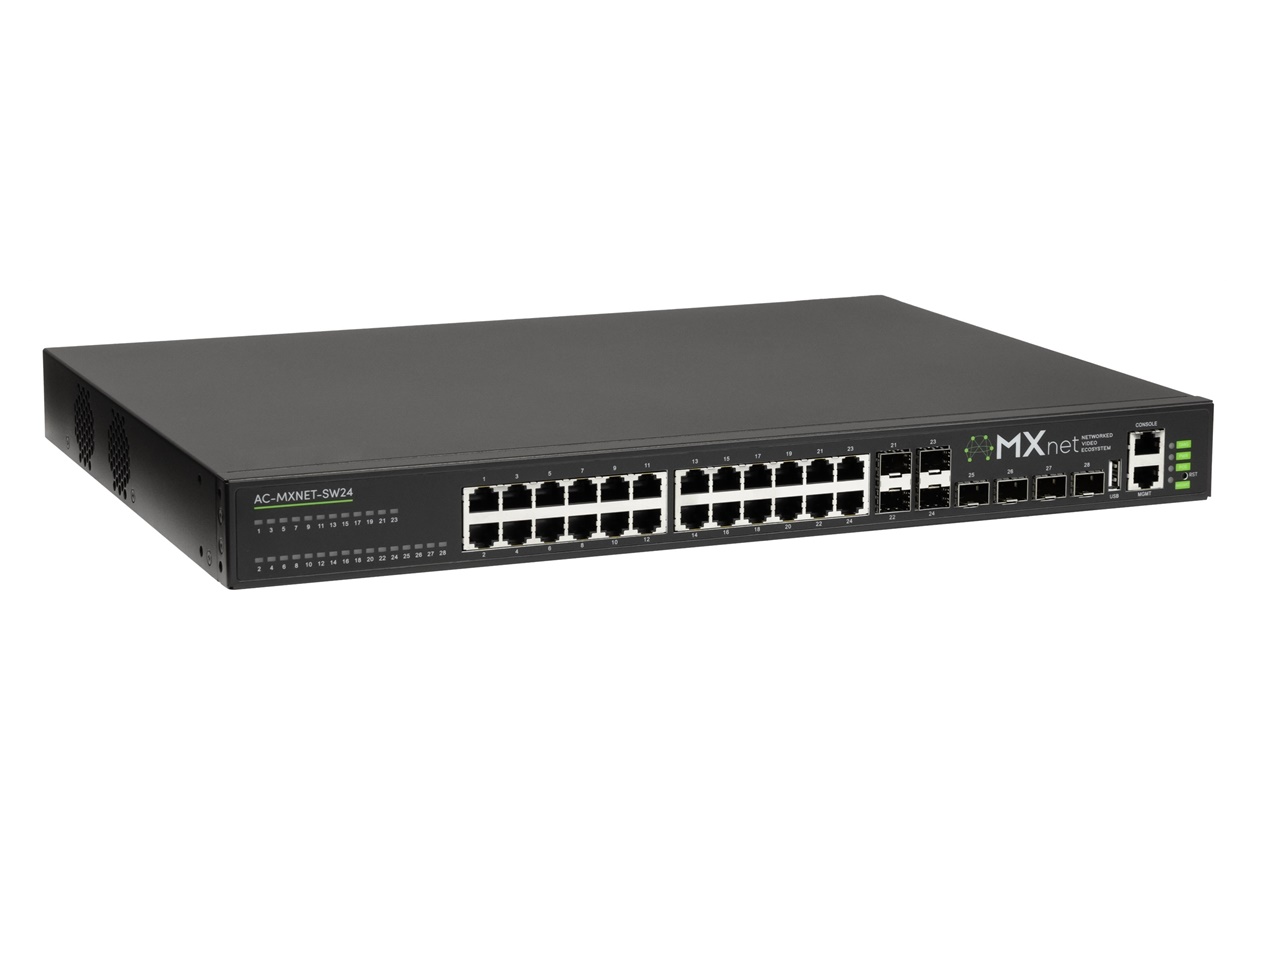 AC-MXNET-SW24 MXNet 24 Port Network Switch by AVPro Edge